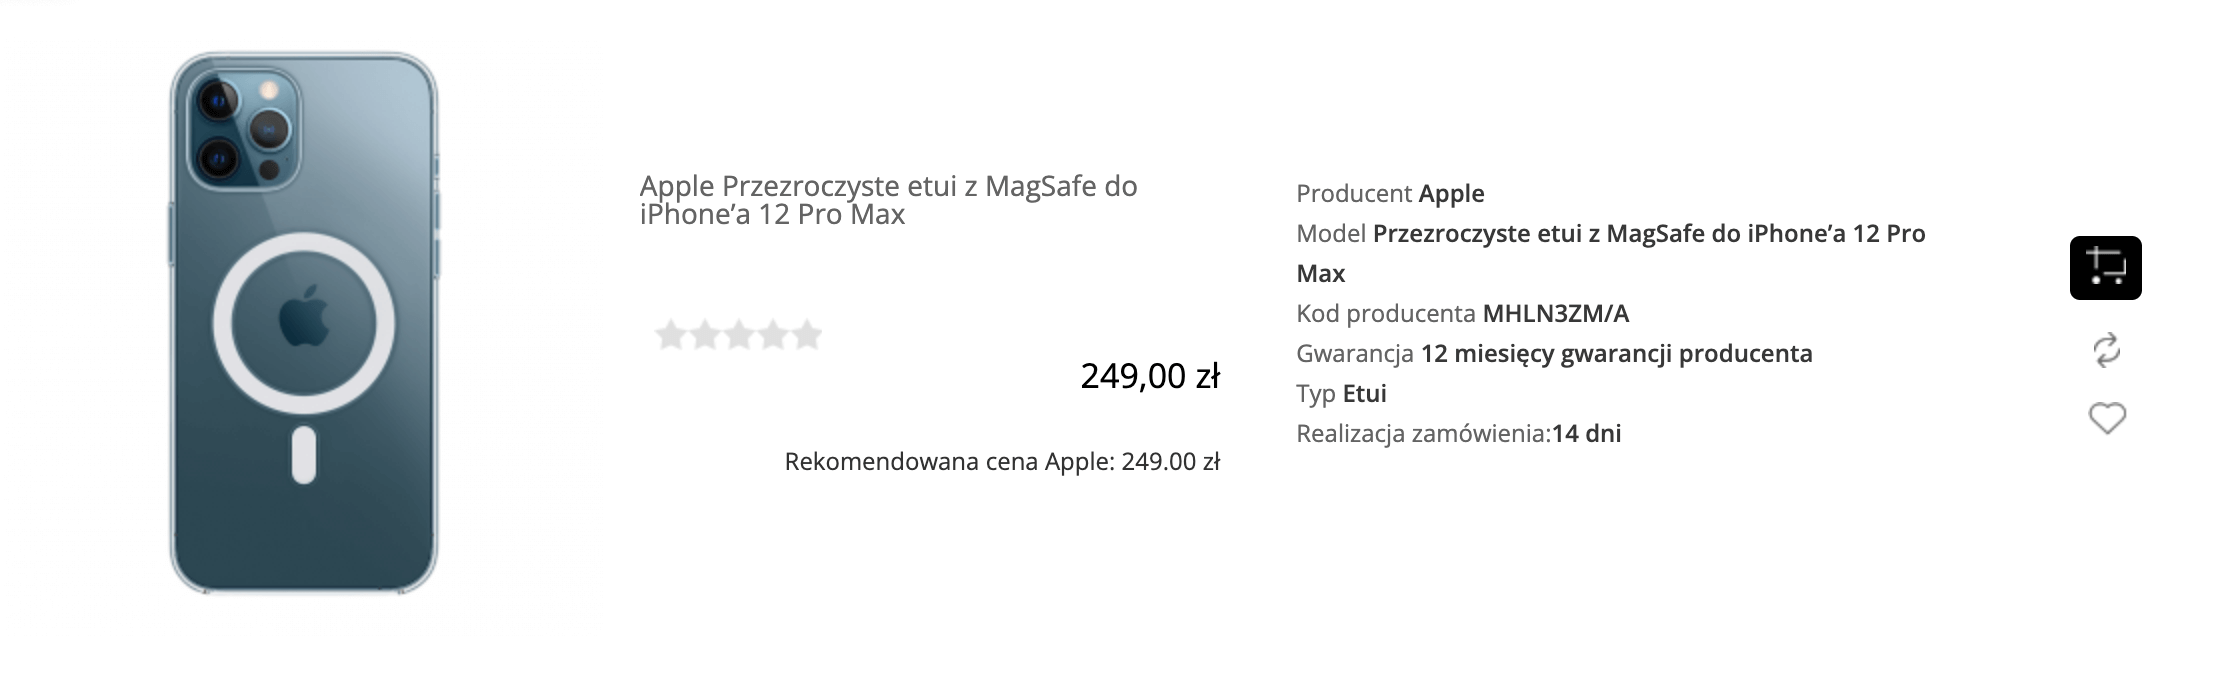 Apple Przezroczyste etui z MagSafe do iPhone’a 12 Pro Max - MHLN3ZM/A 